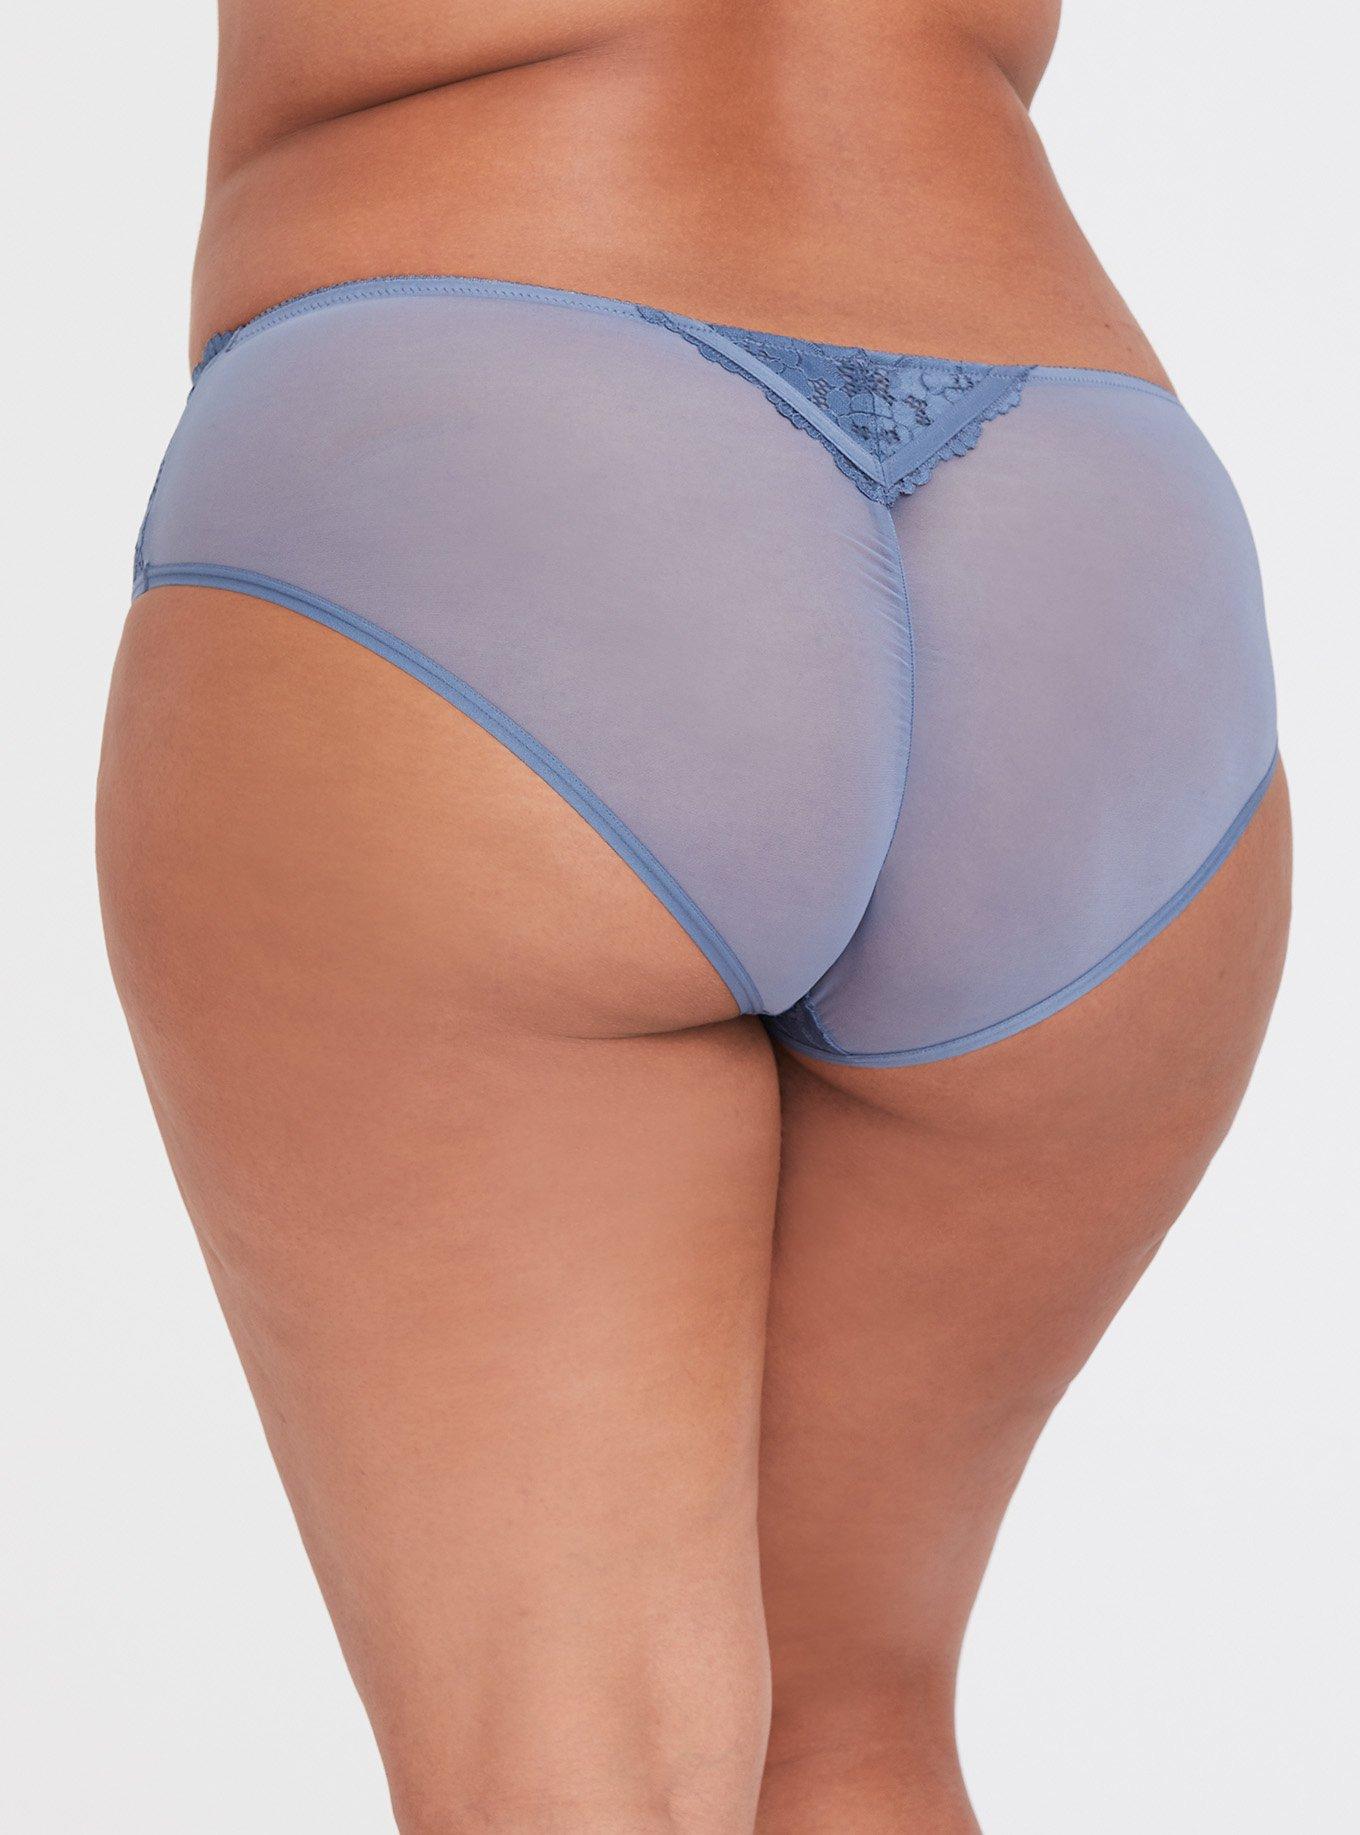 Plus Size - Thong Panty - Lace Sea Blue - Torrid